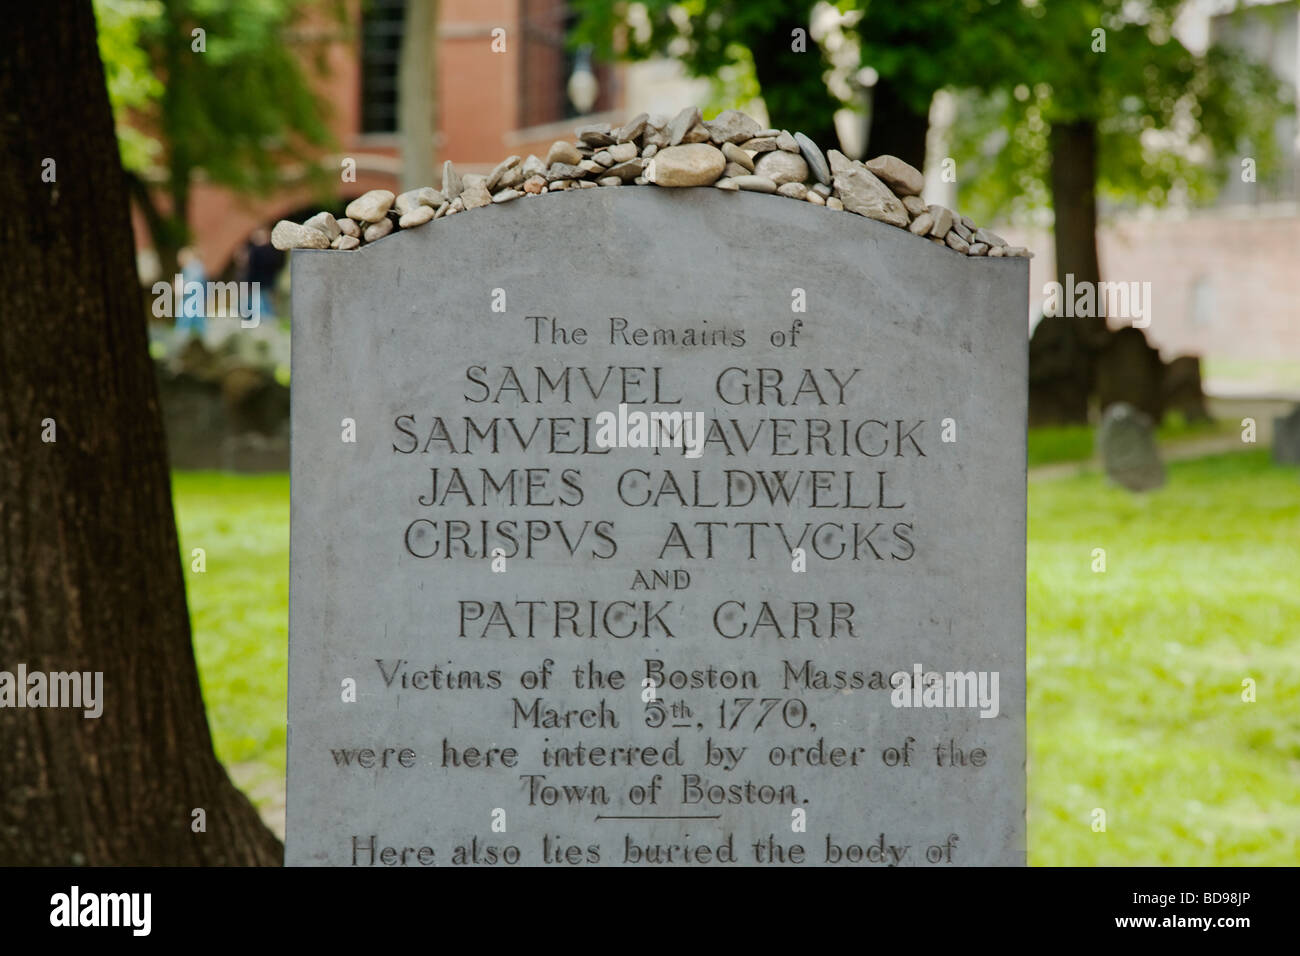 Grave of the victims of the Boston Massacre in the GRANARY BURYING GROUND BOSTON MASSACHUSETTS Stock Photo